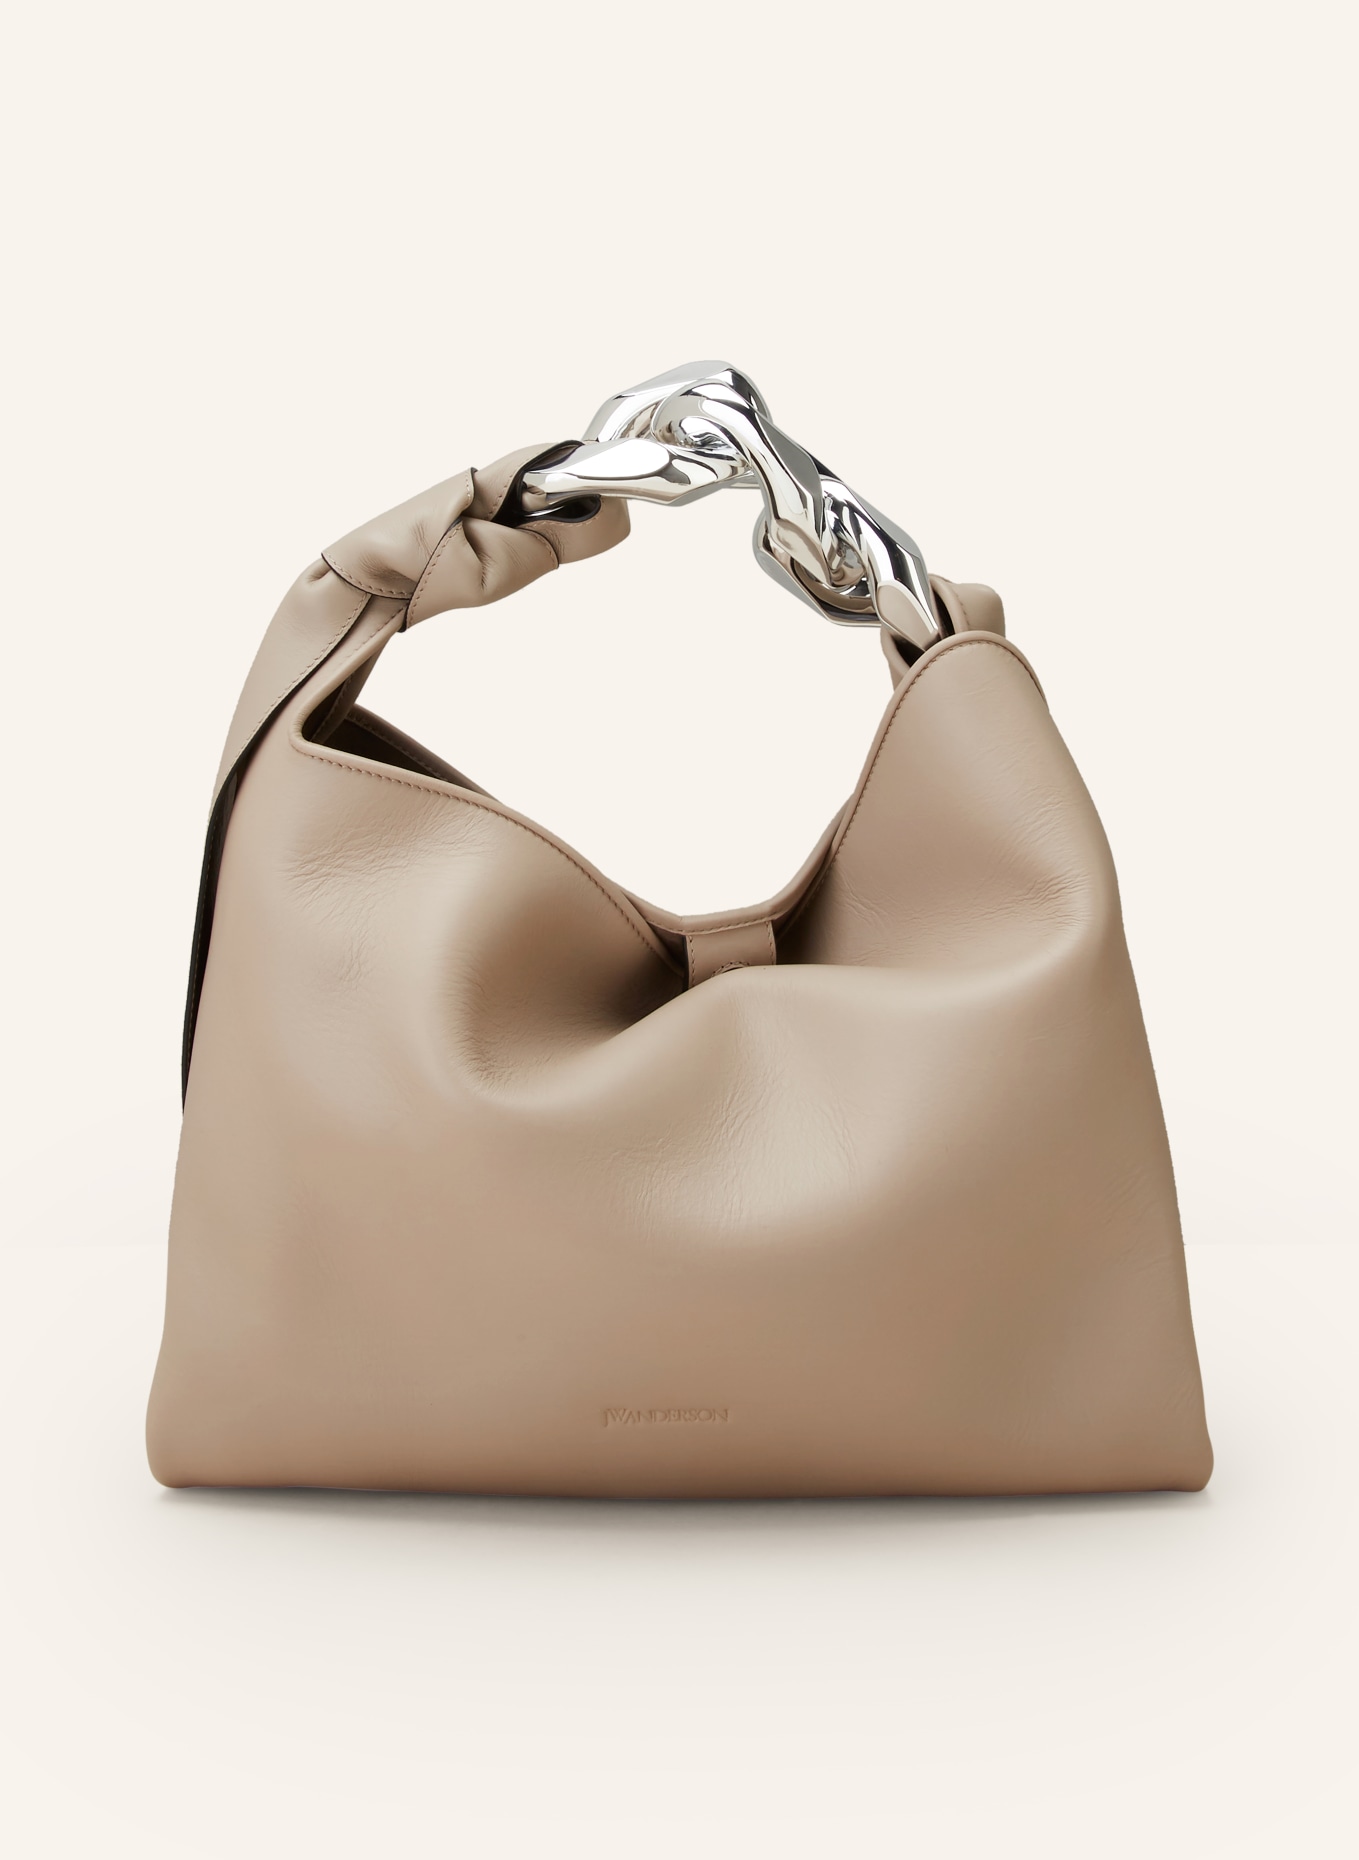 JW ANDERSON Hobo-Bag CHAIN SMALL, Farbe: TAUPE (Bild 1)